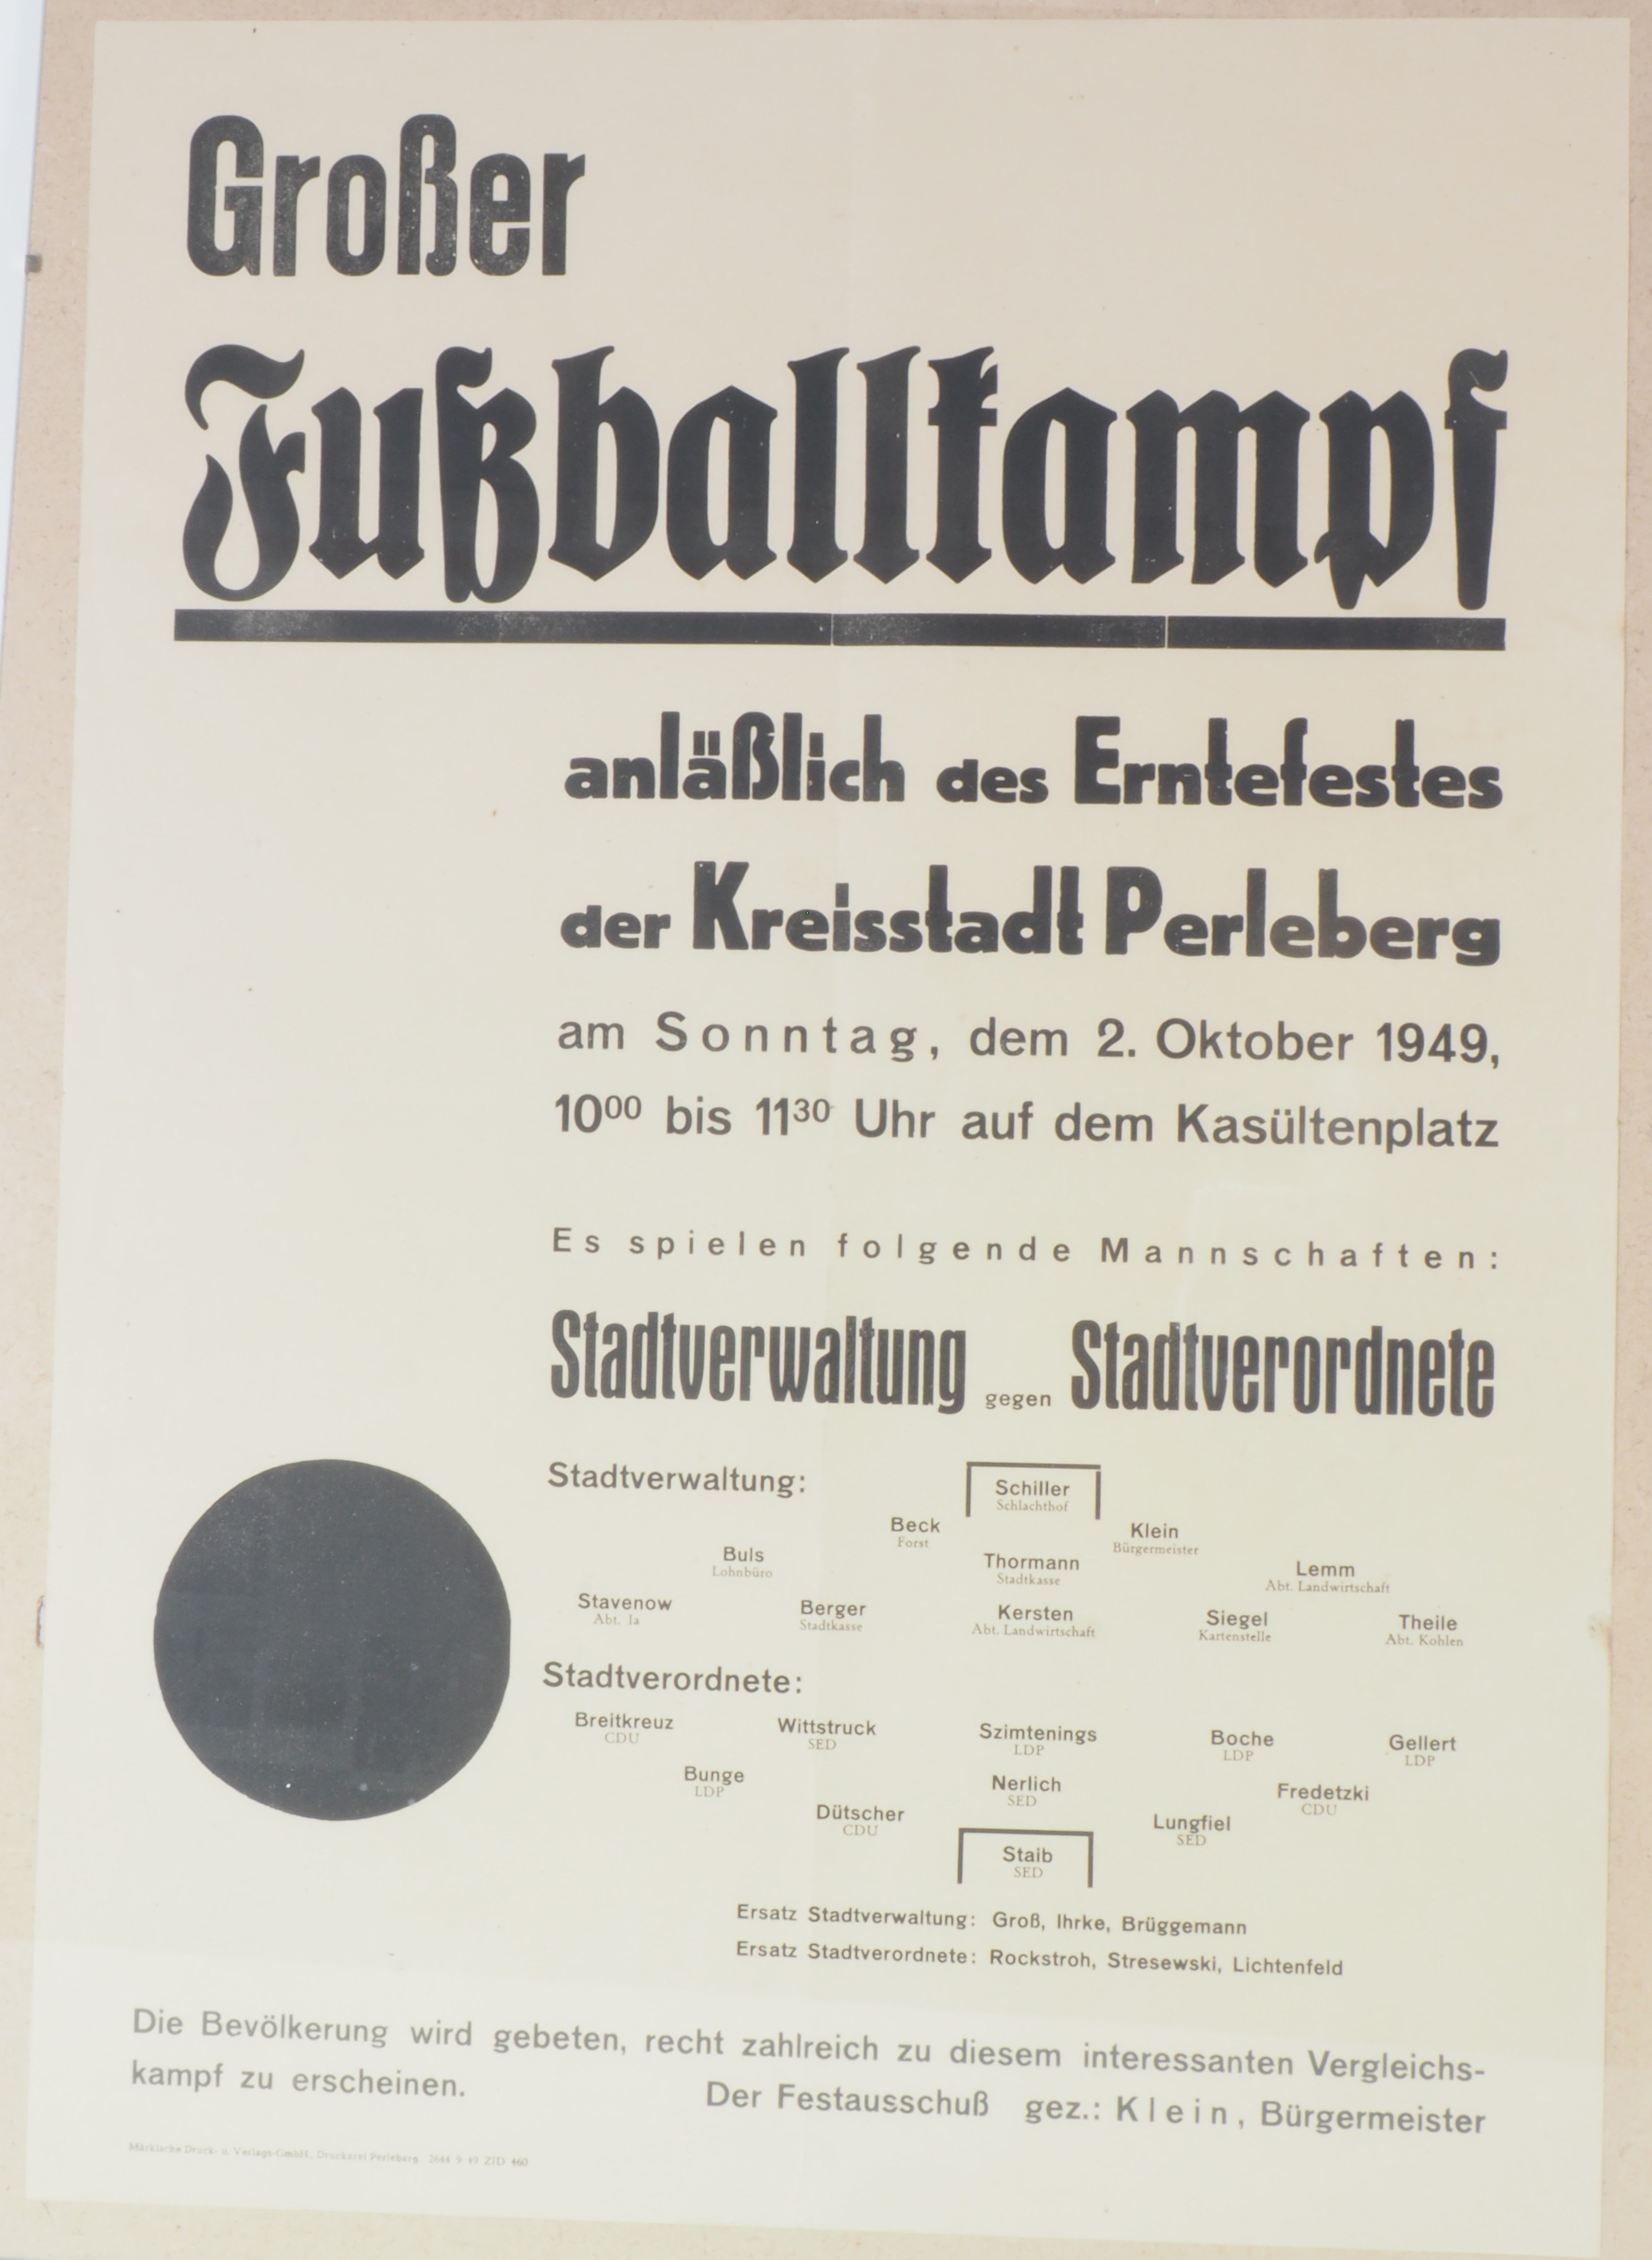 Plakat: "Großer Fußballkampf" in Perleberg (DDR Geschichtsmuseum im Dokumentationszentrum Perleberg CC BY-SA)